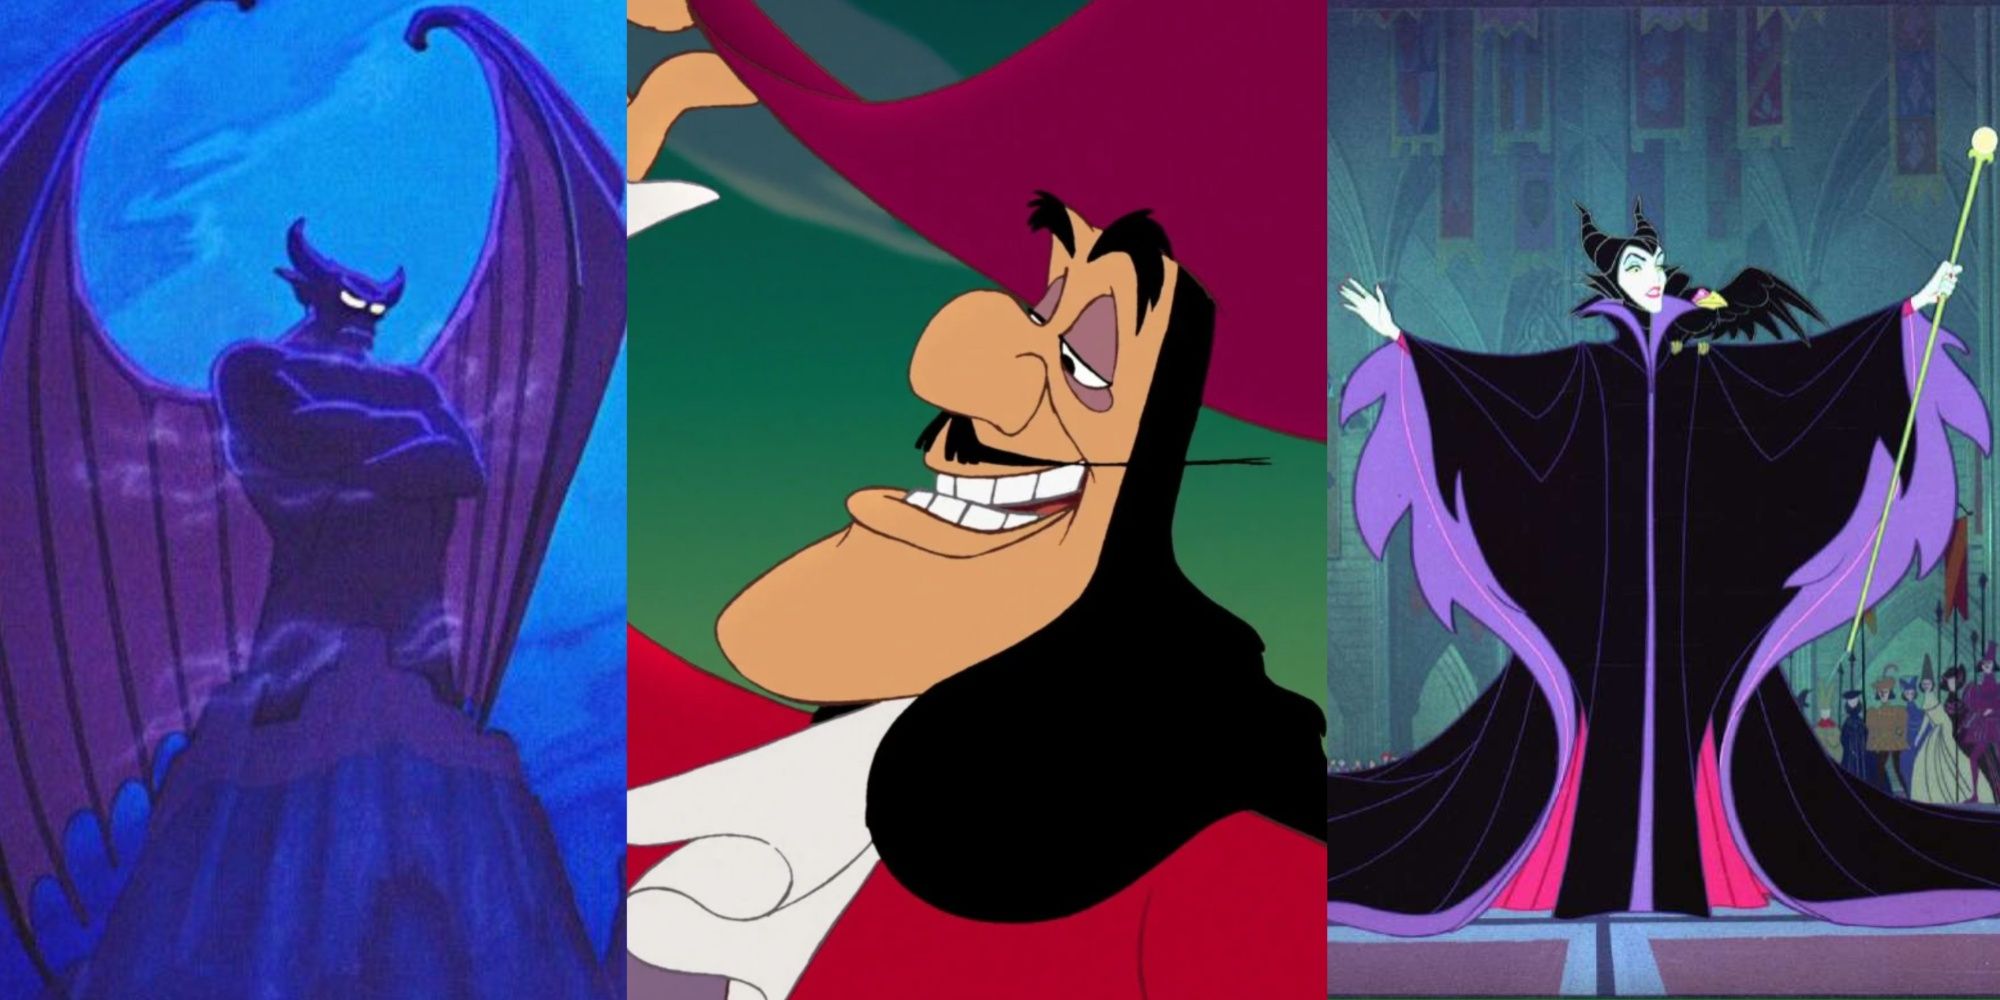 Top Ten Disney Villains Based on Success